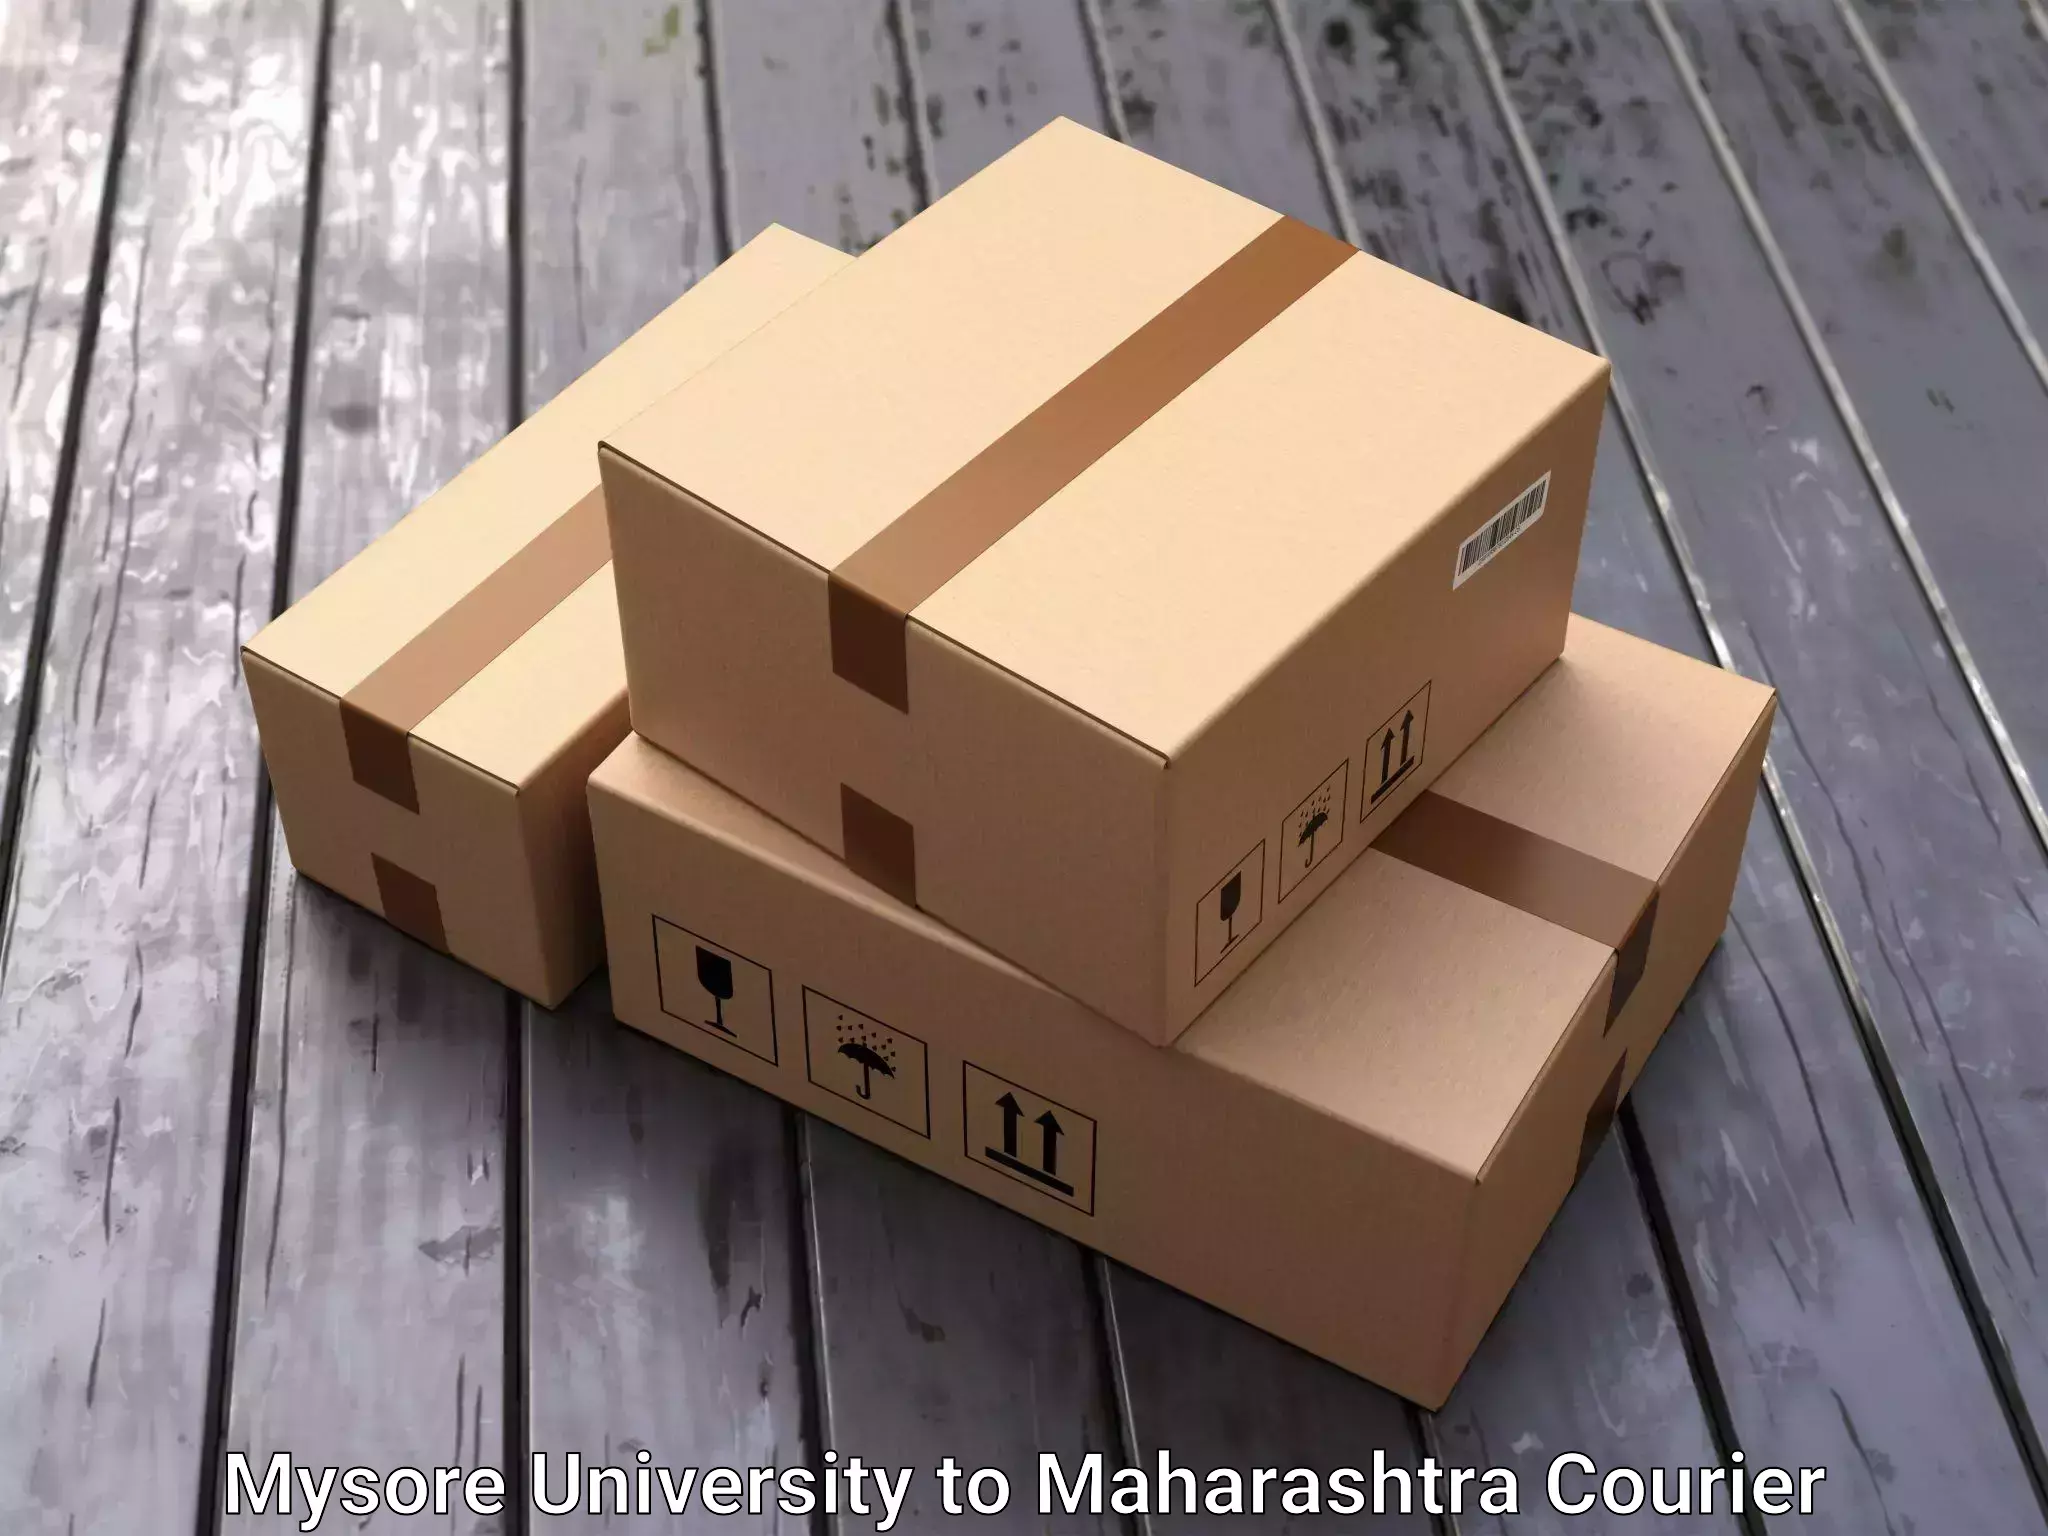 Household moving experts Mysore University to Pusad